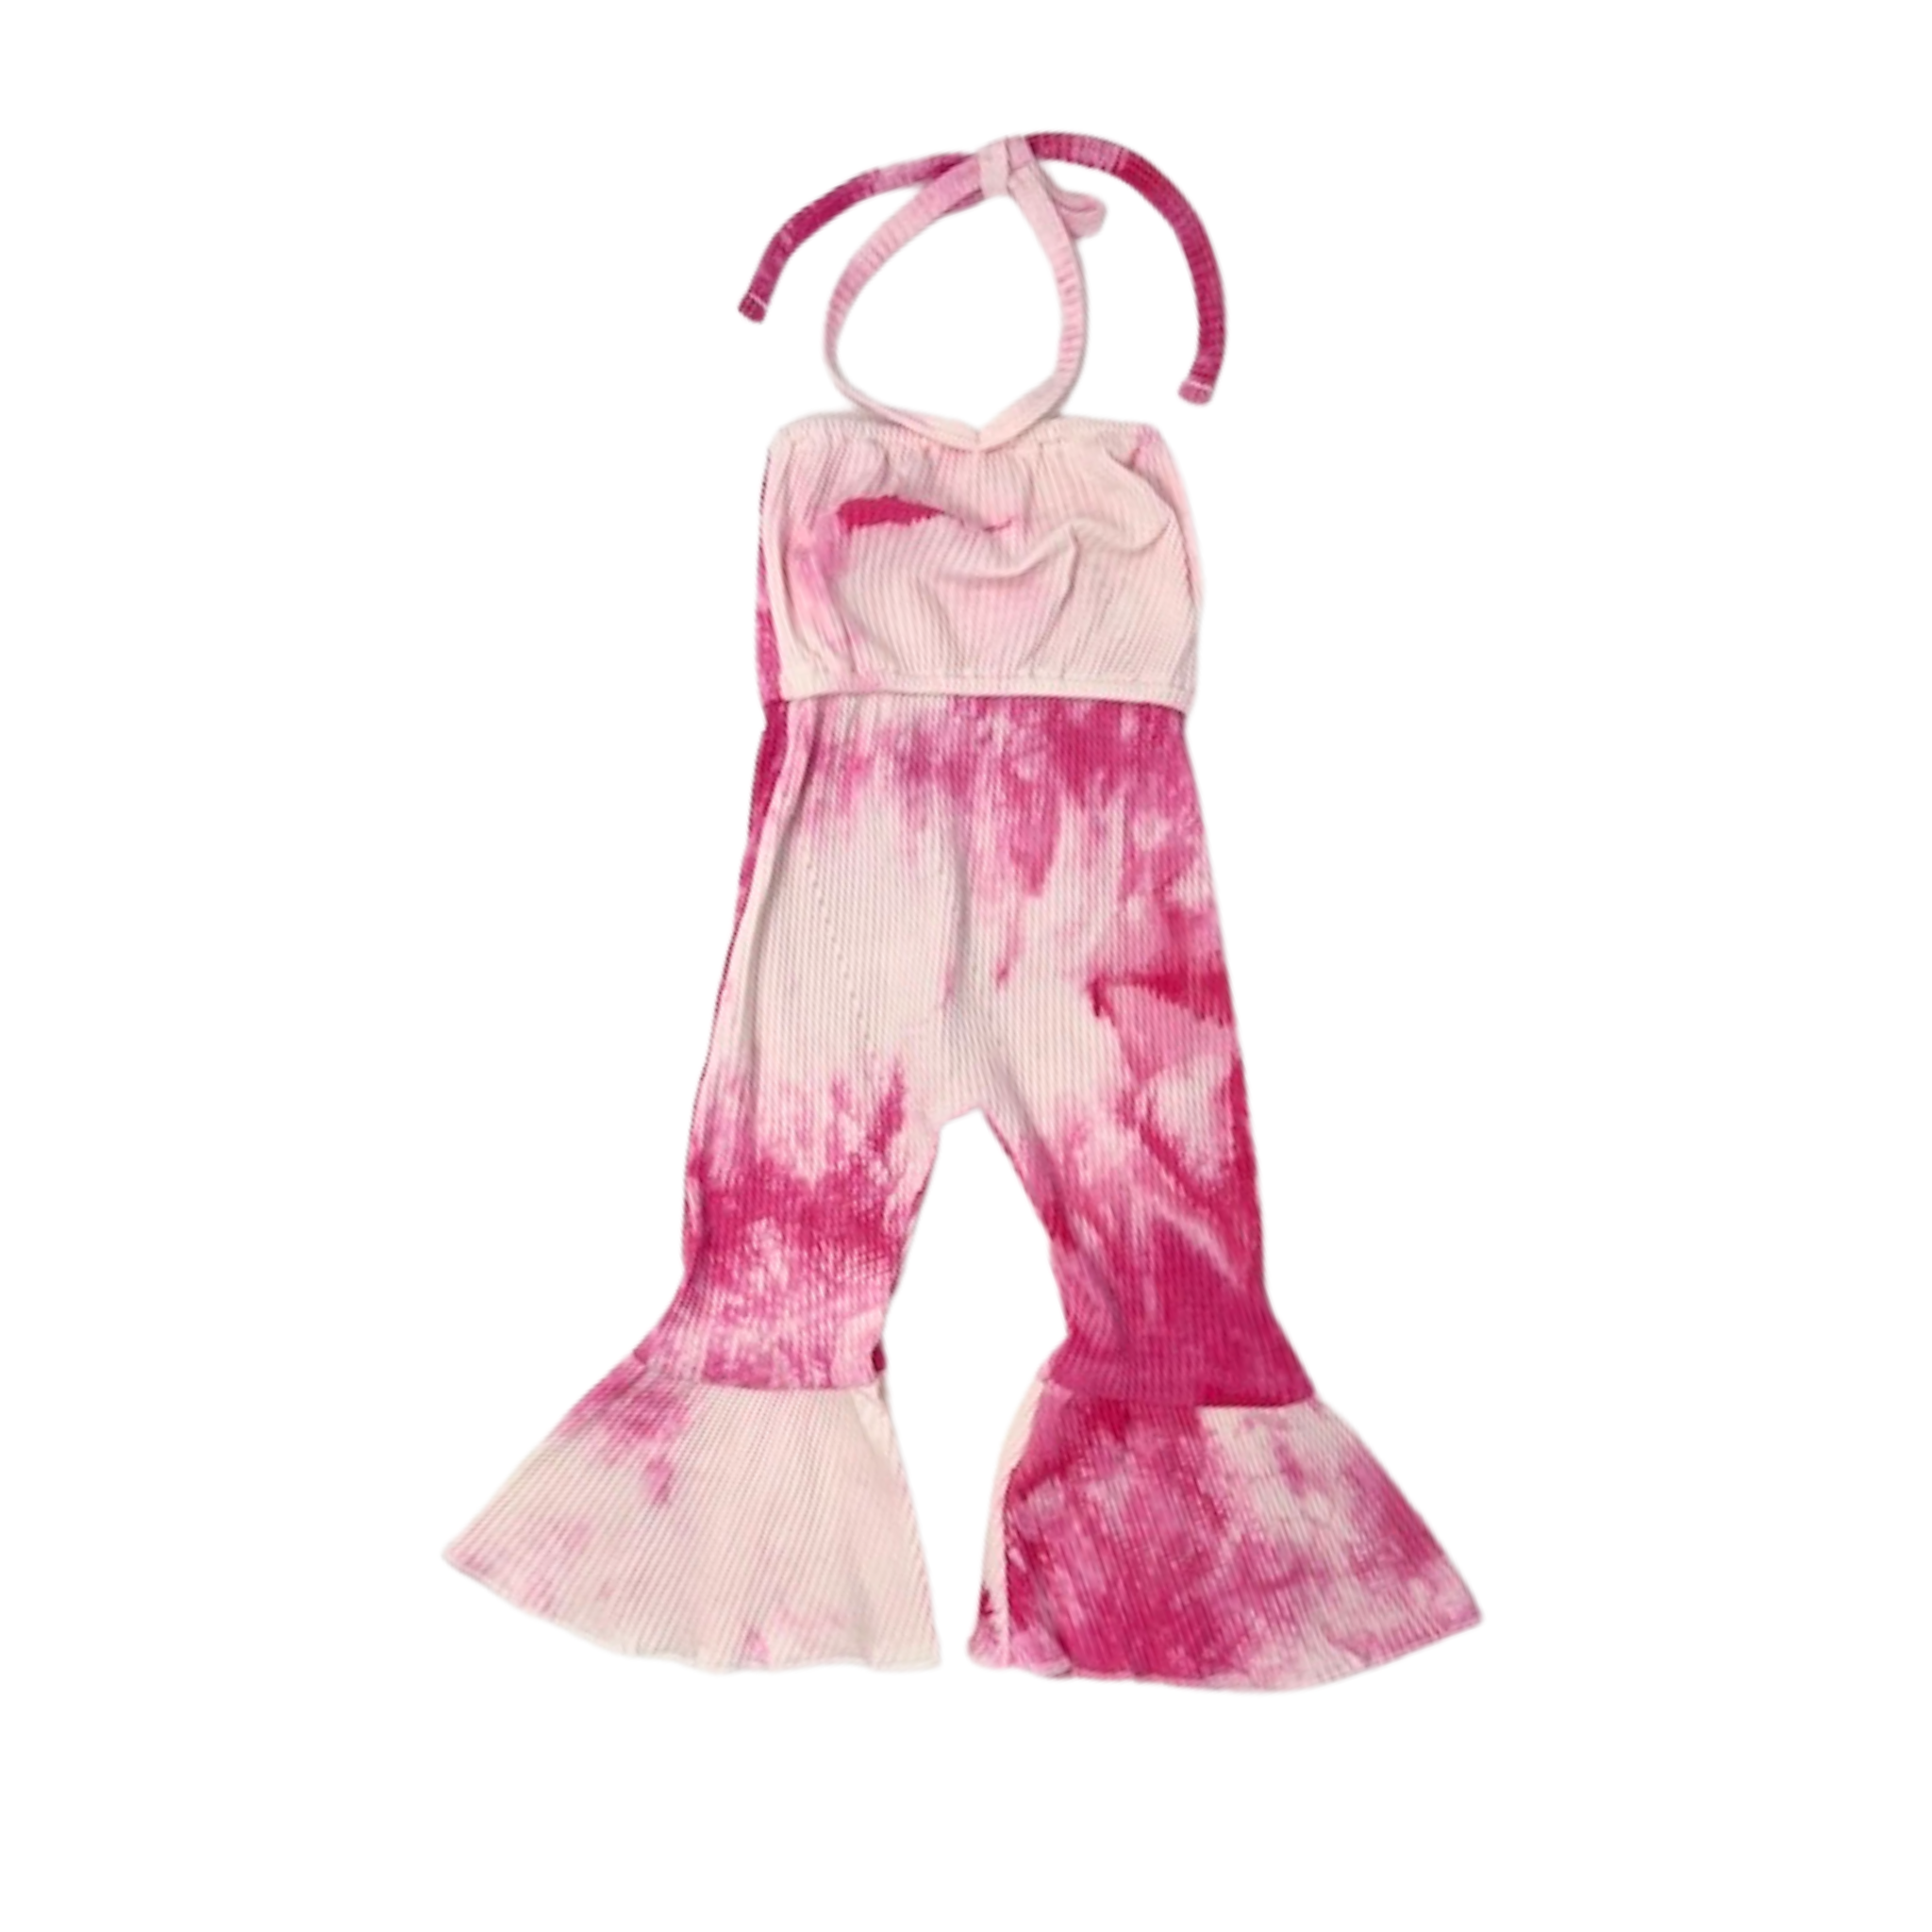 Children's Pink Tie-Dye Carpi Jumpsuit with Bellbottoms and halter top at Untamed Kids Apparel